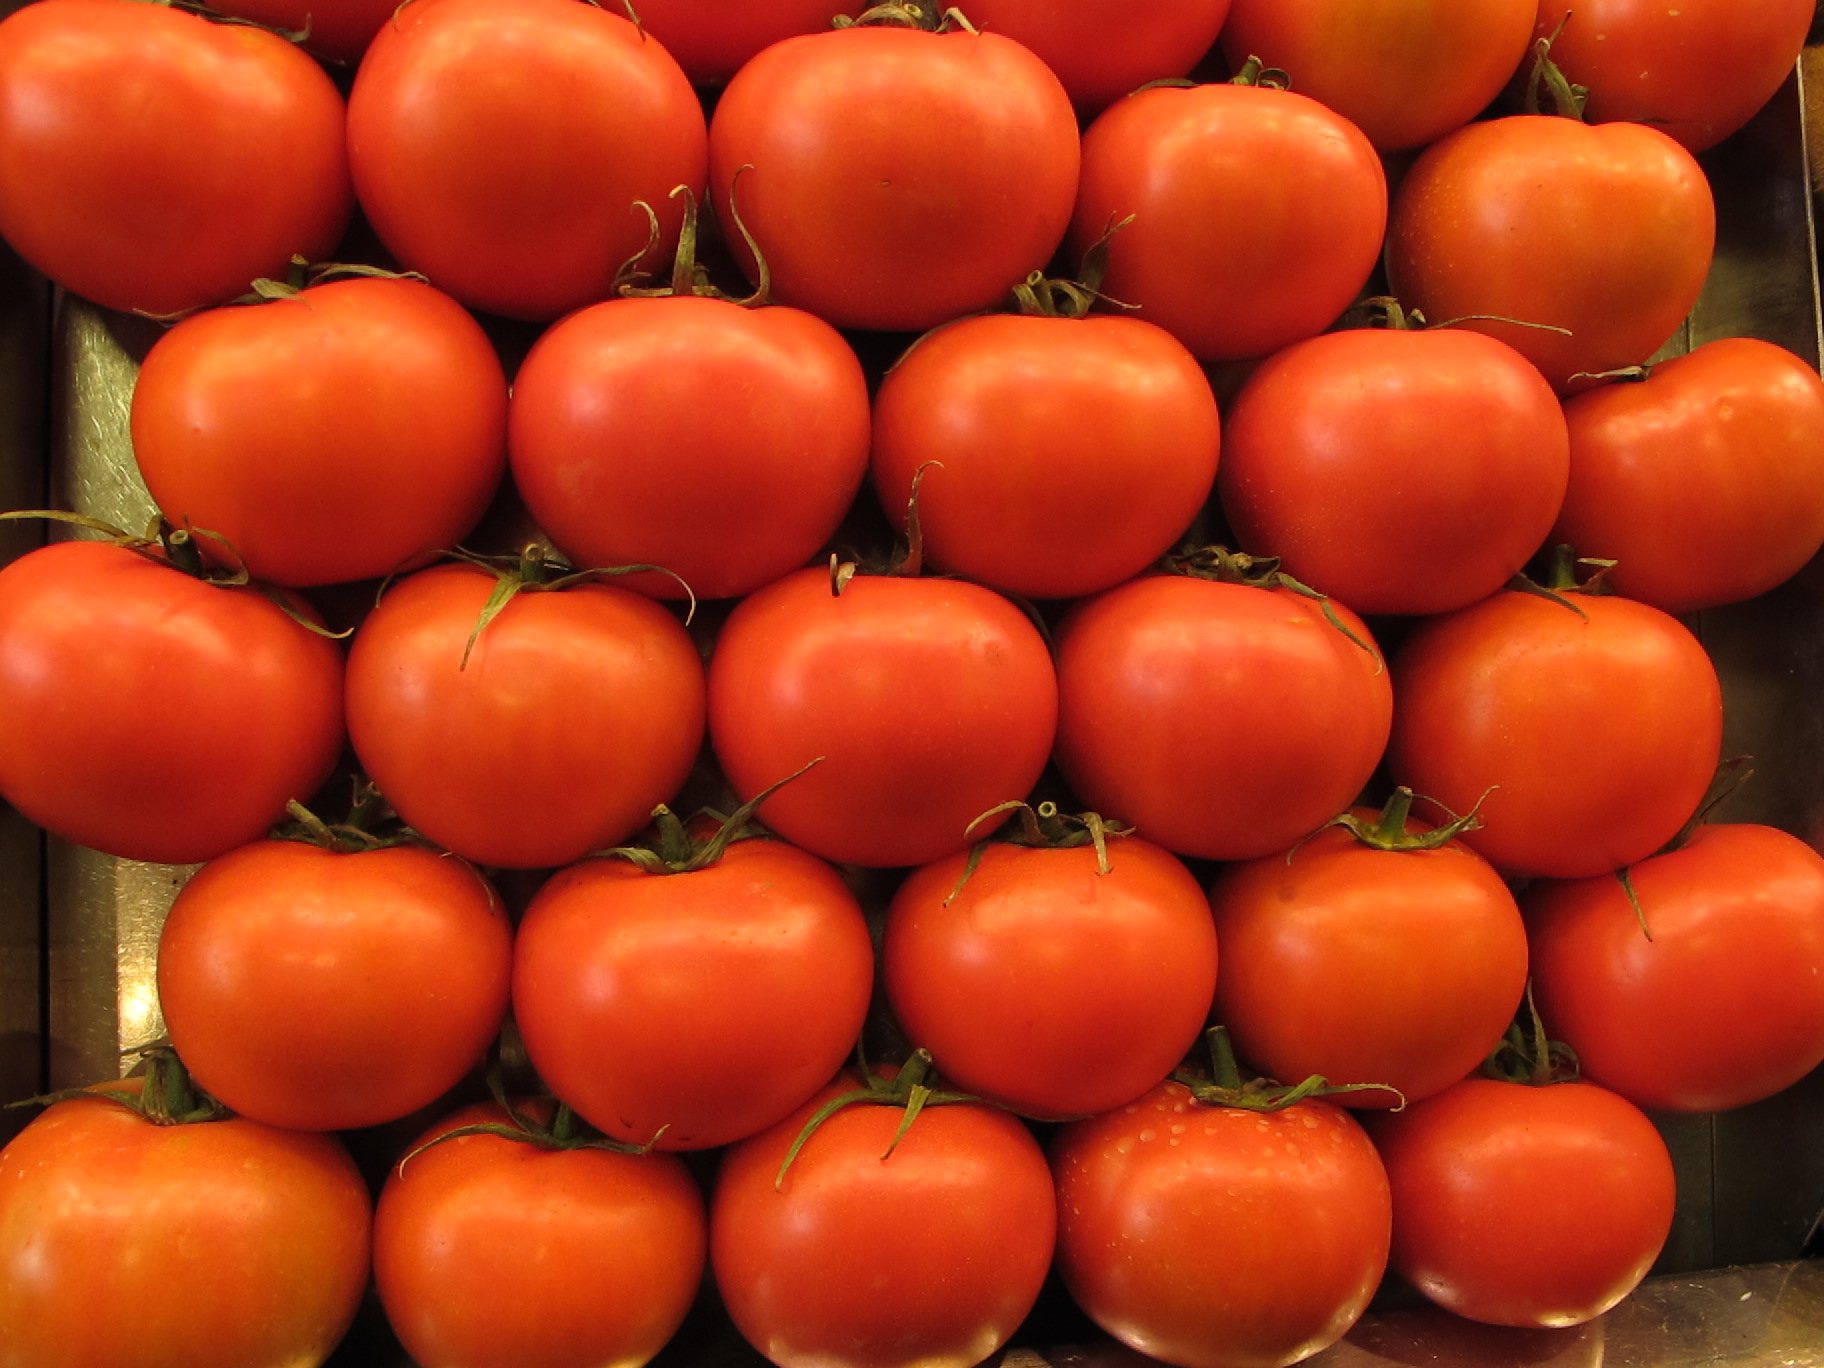 File:Ripe tomatoes.JPG - Wikimedia Commons